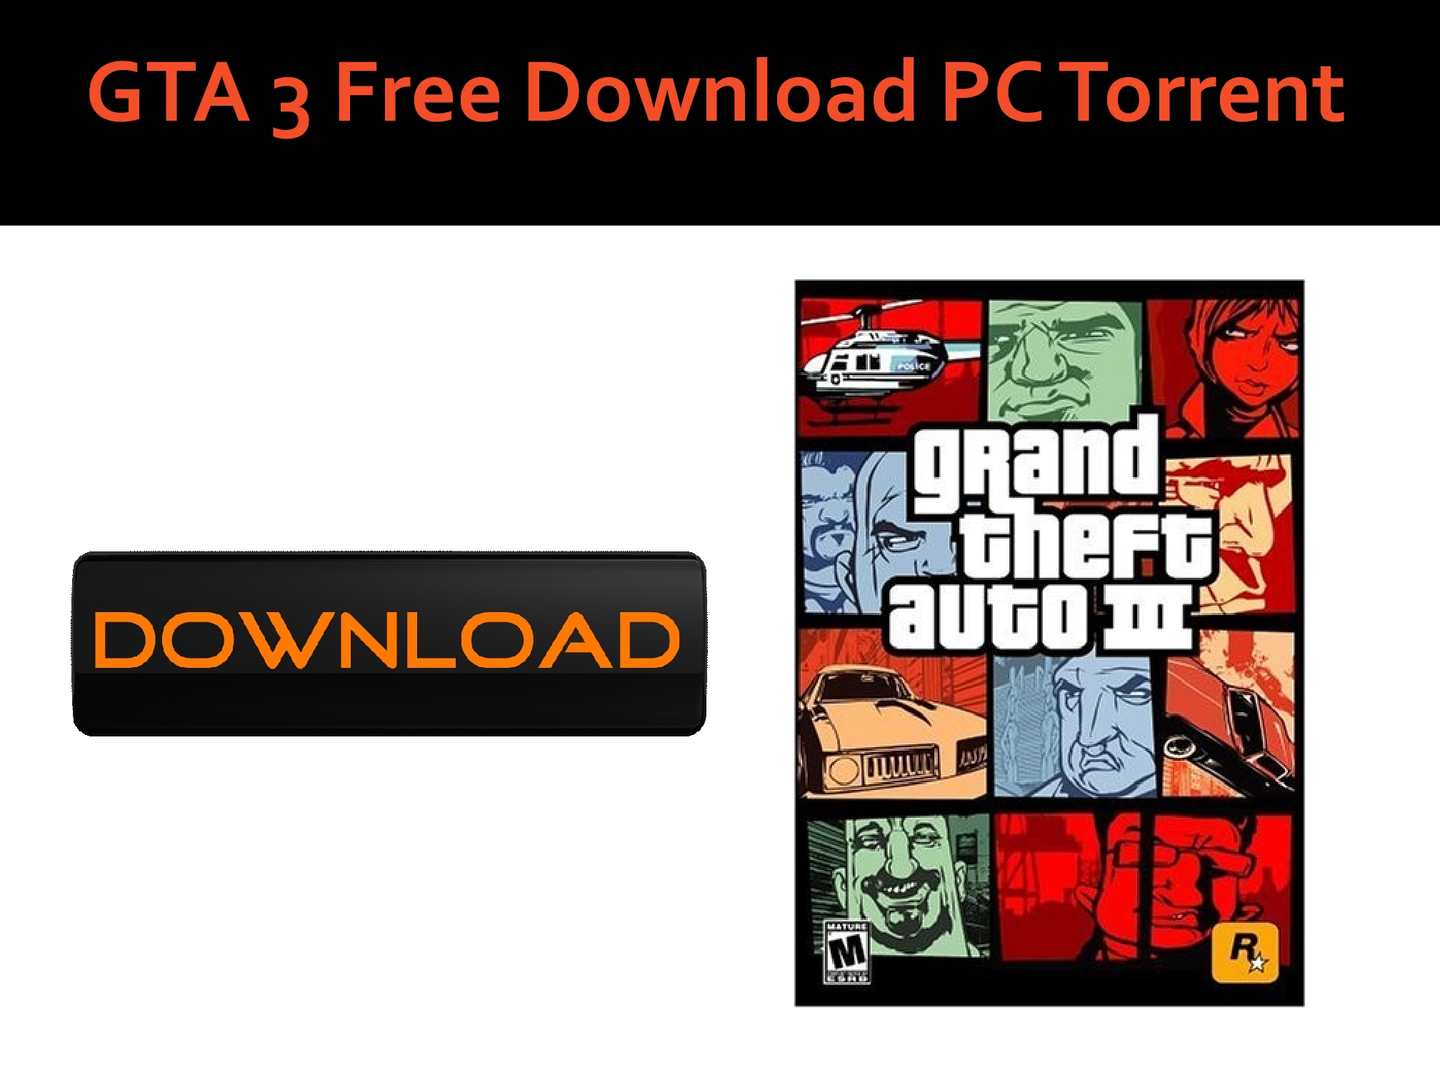 gta torrent download pc